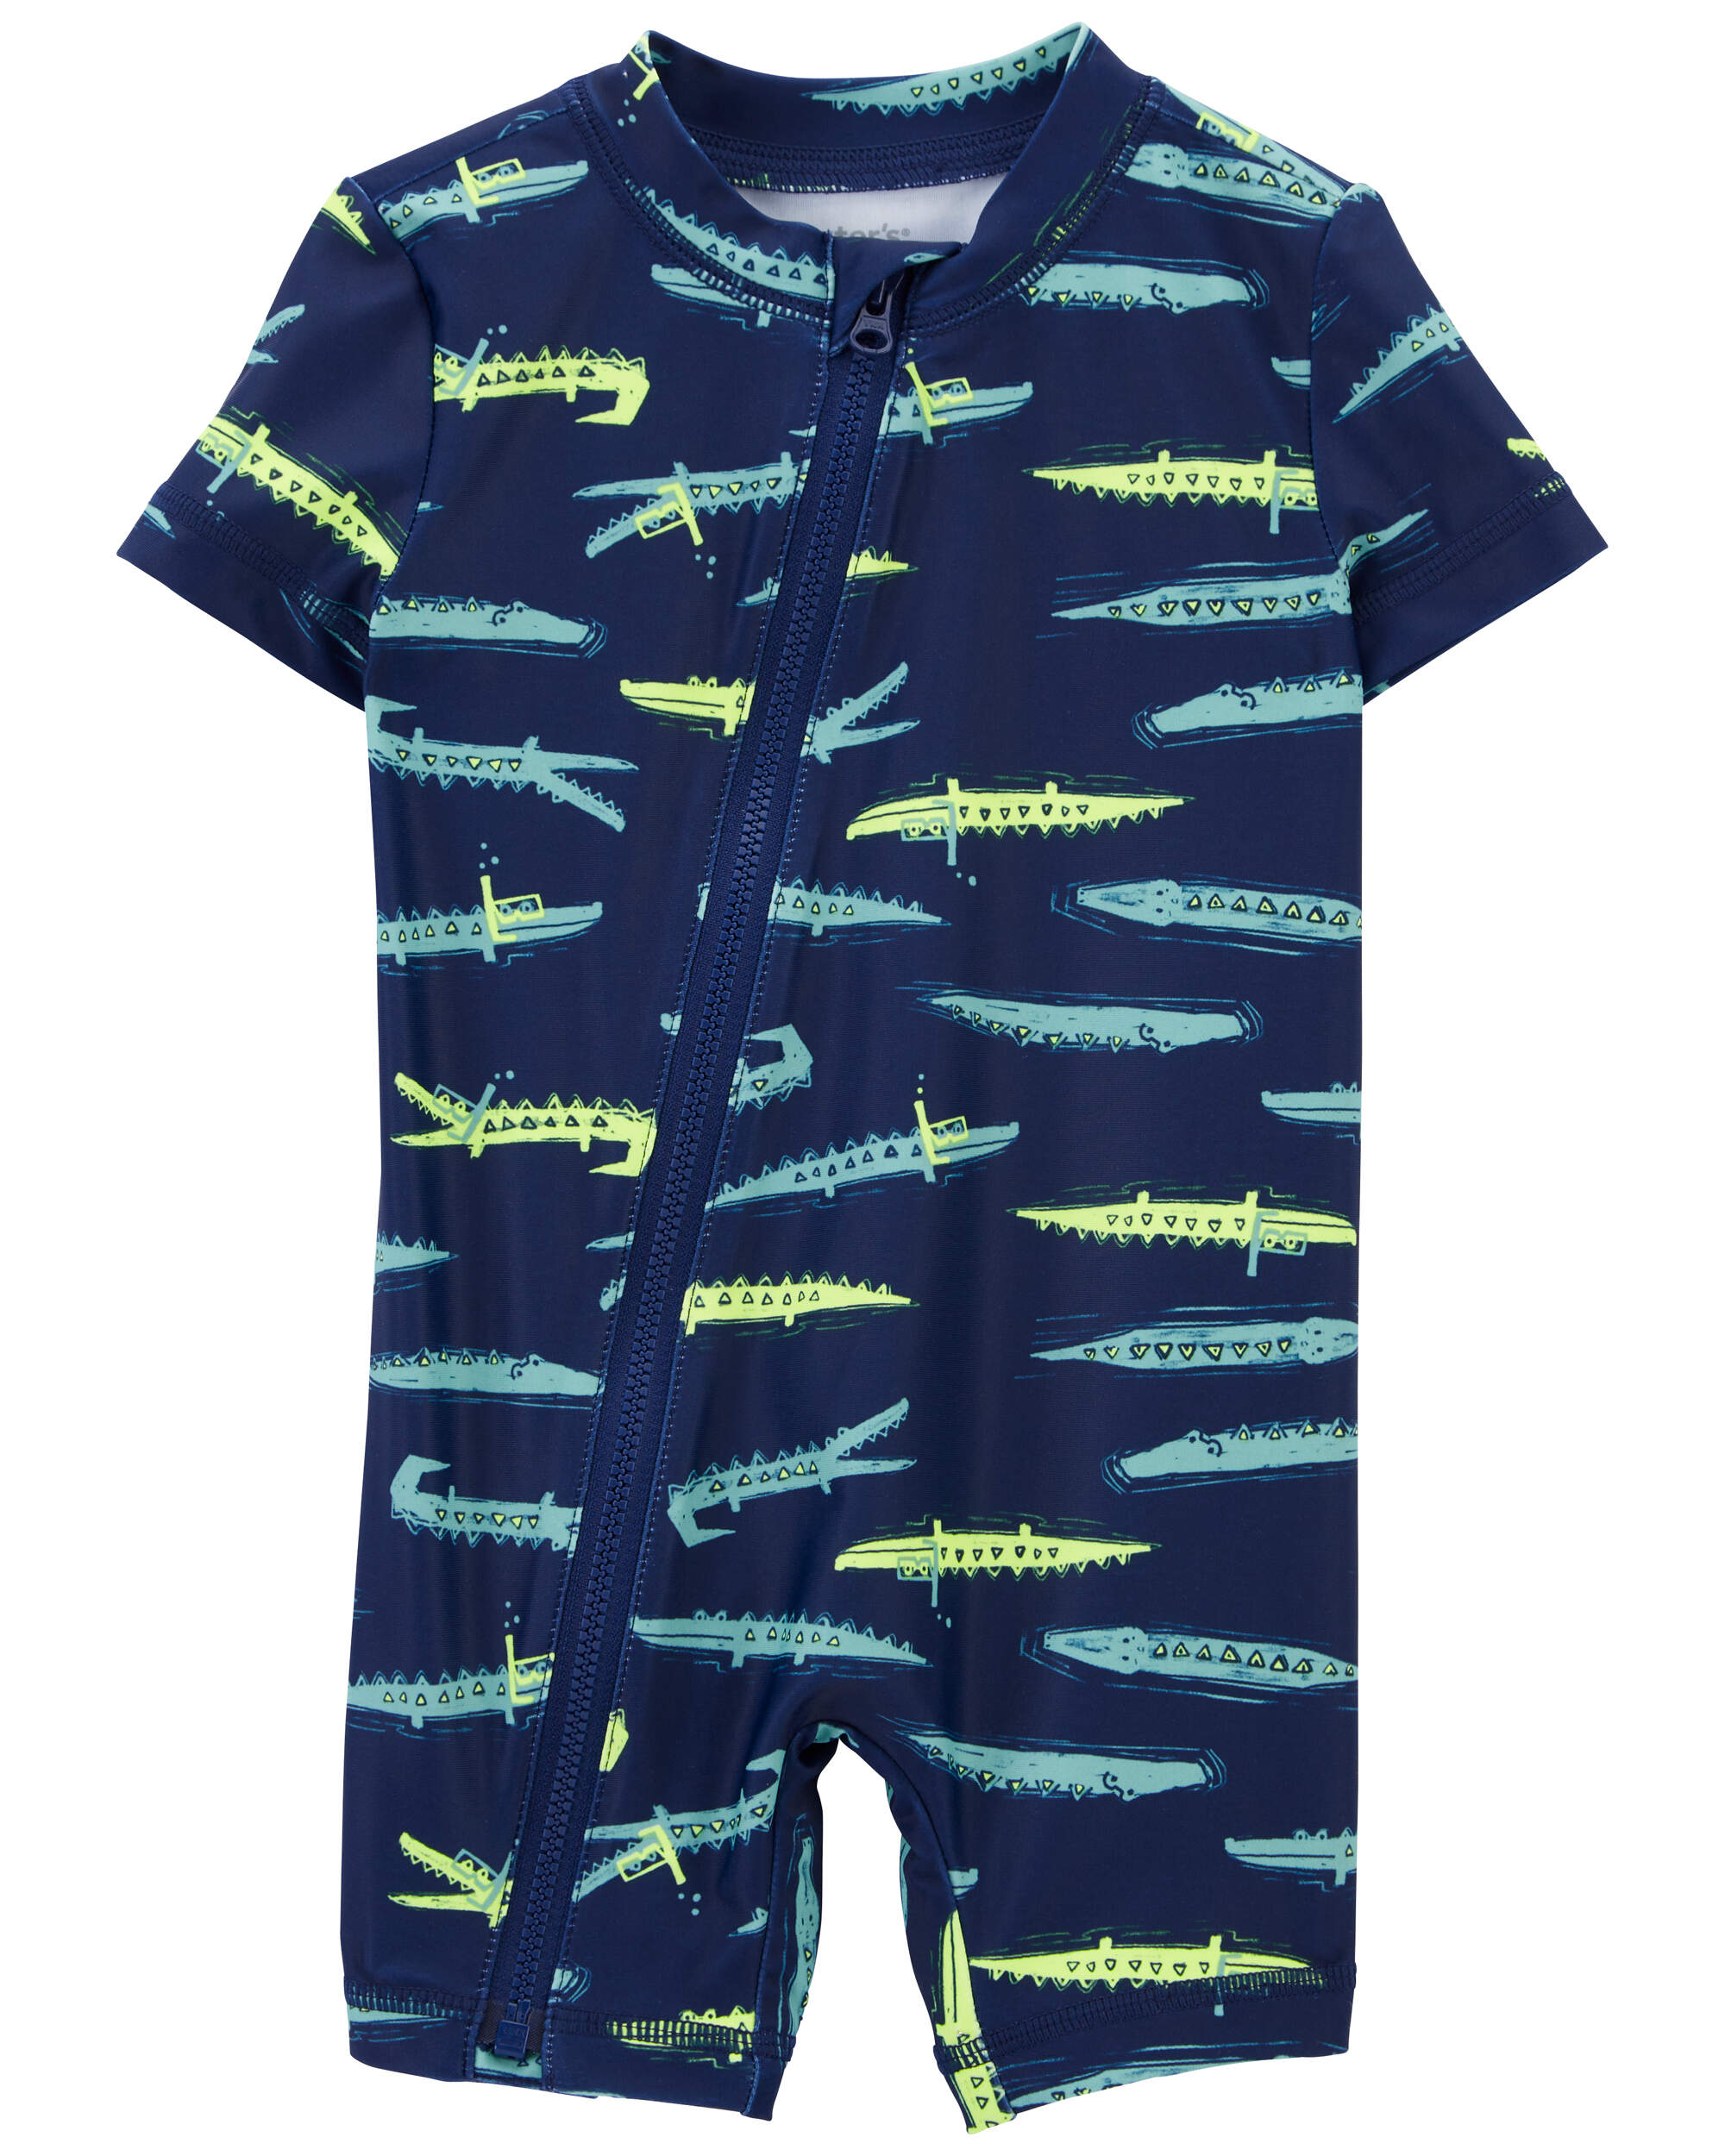 Baby Alligator Print Rashguard Swimsuit